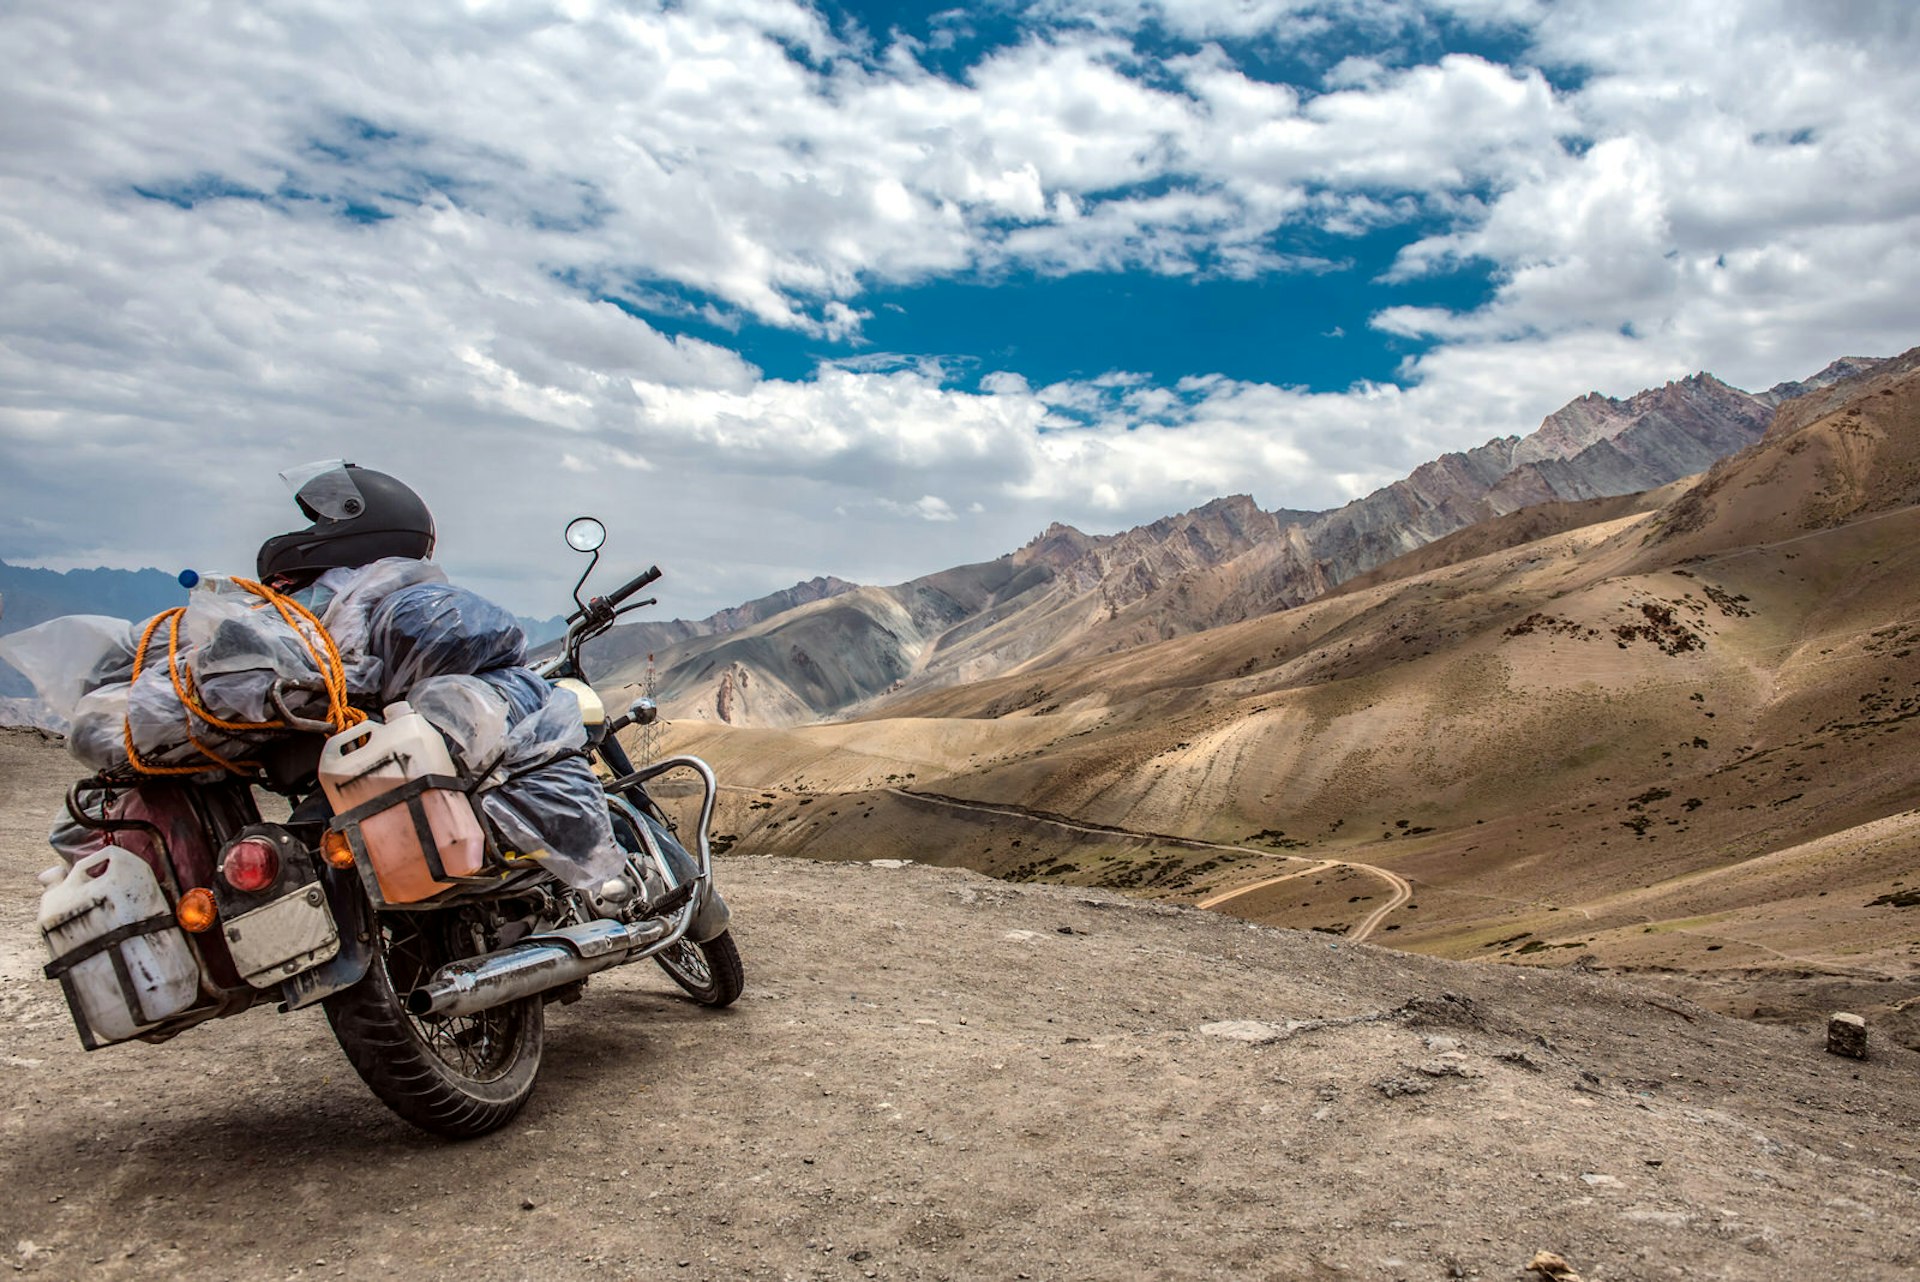 Motorcycle parked in an arid desert landscape in Spiti in Himachal Pradesh